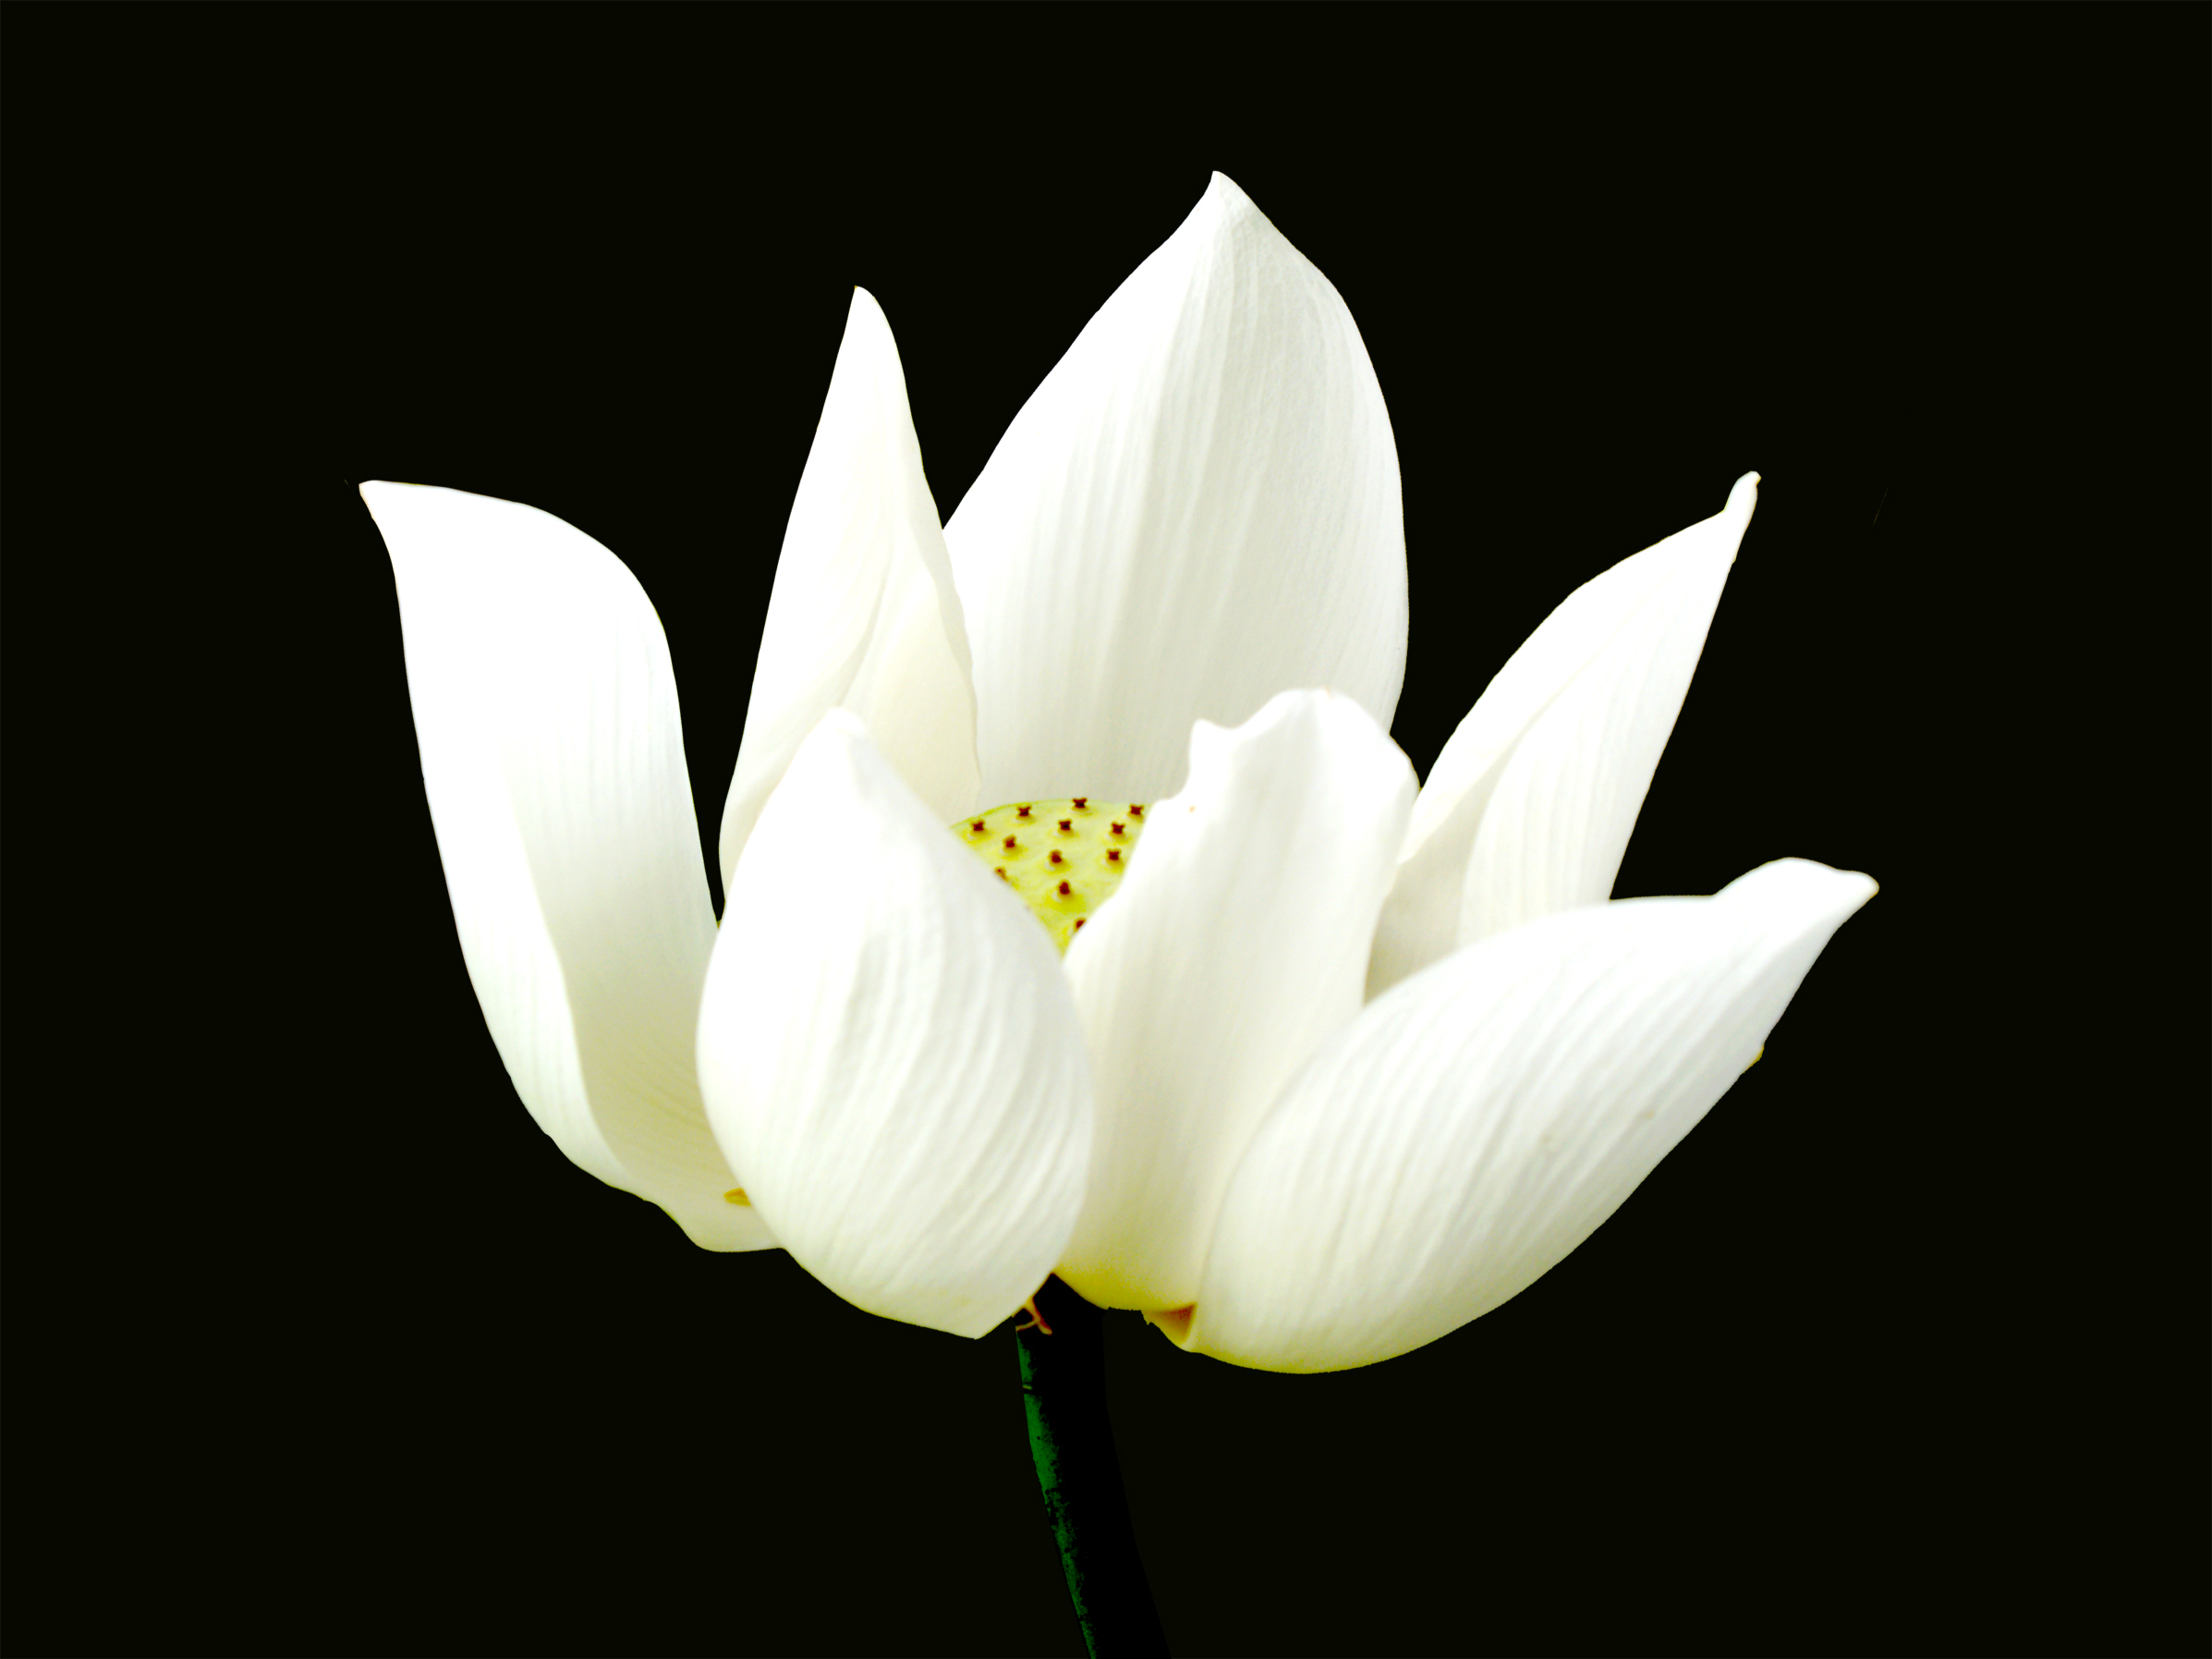 Hoa Sen white nền đen giòn tuyệt đẹp